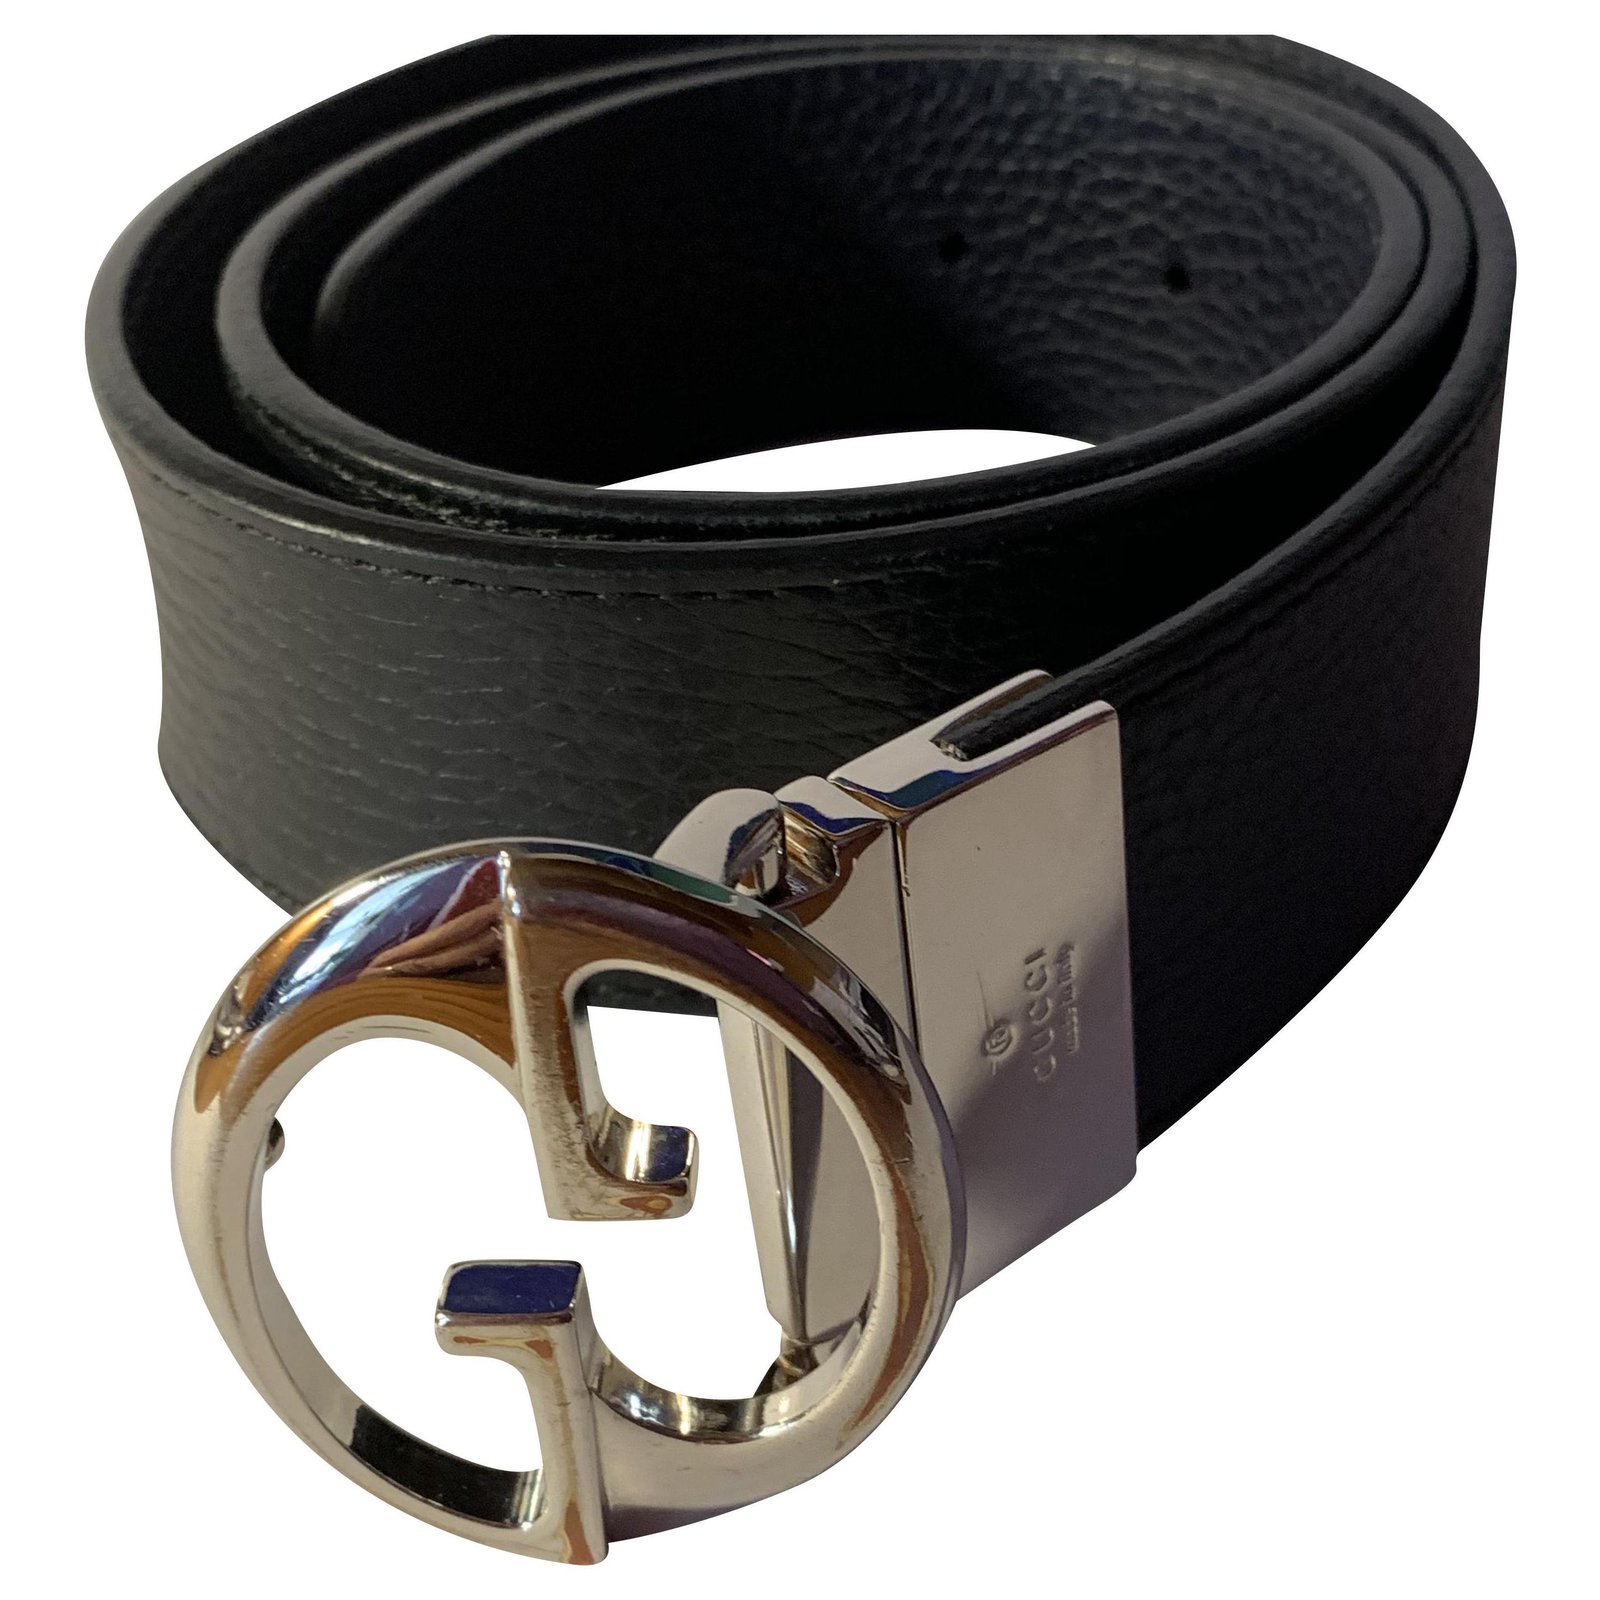 gucci belt women reversible